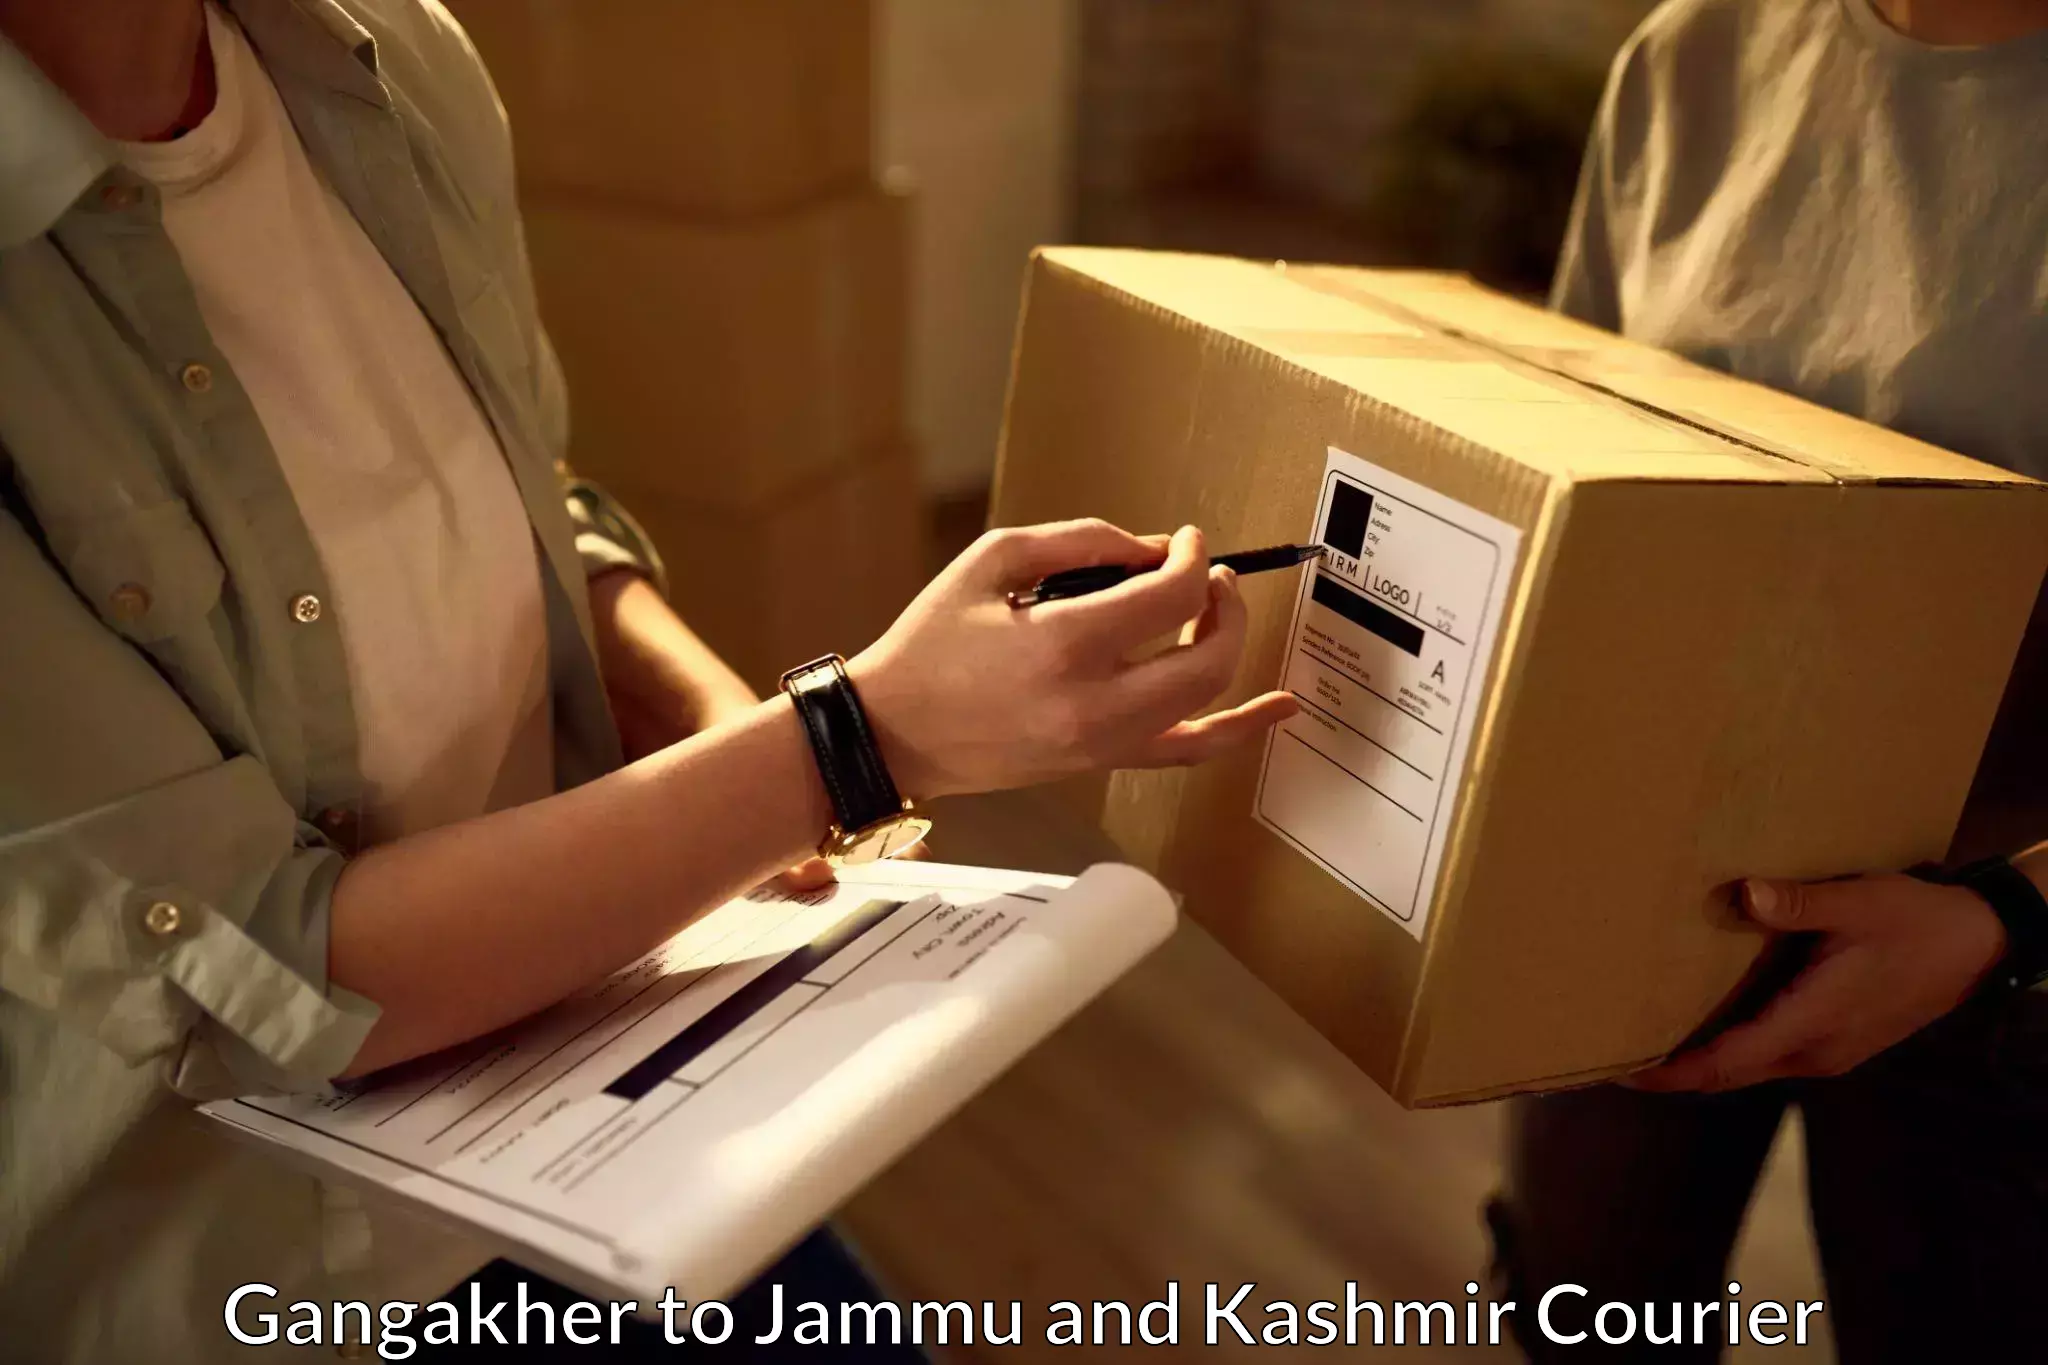 Courier service efficiency Gangakher to Srinagar Kashmir